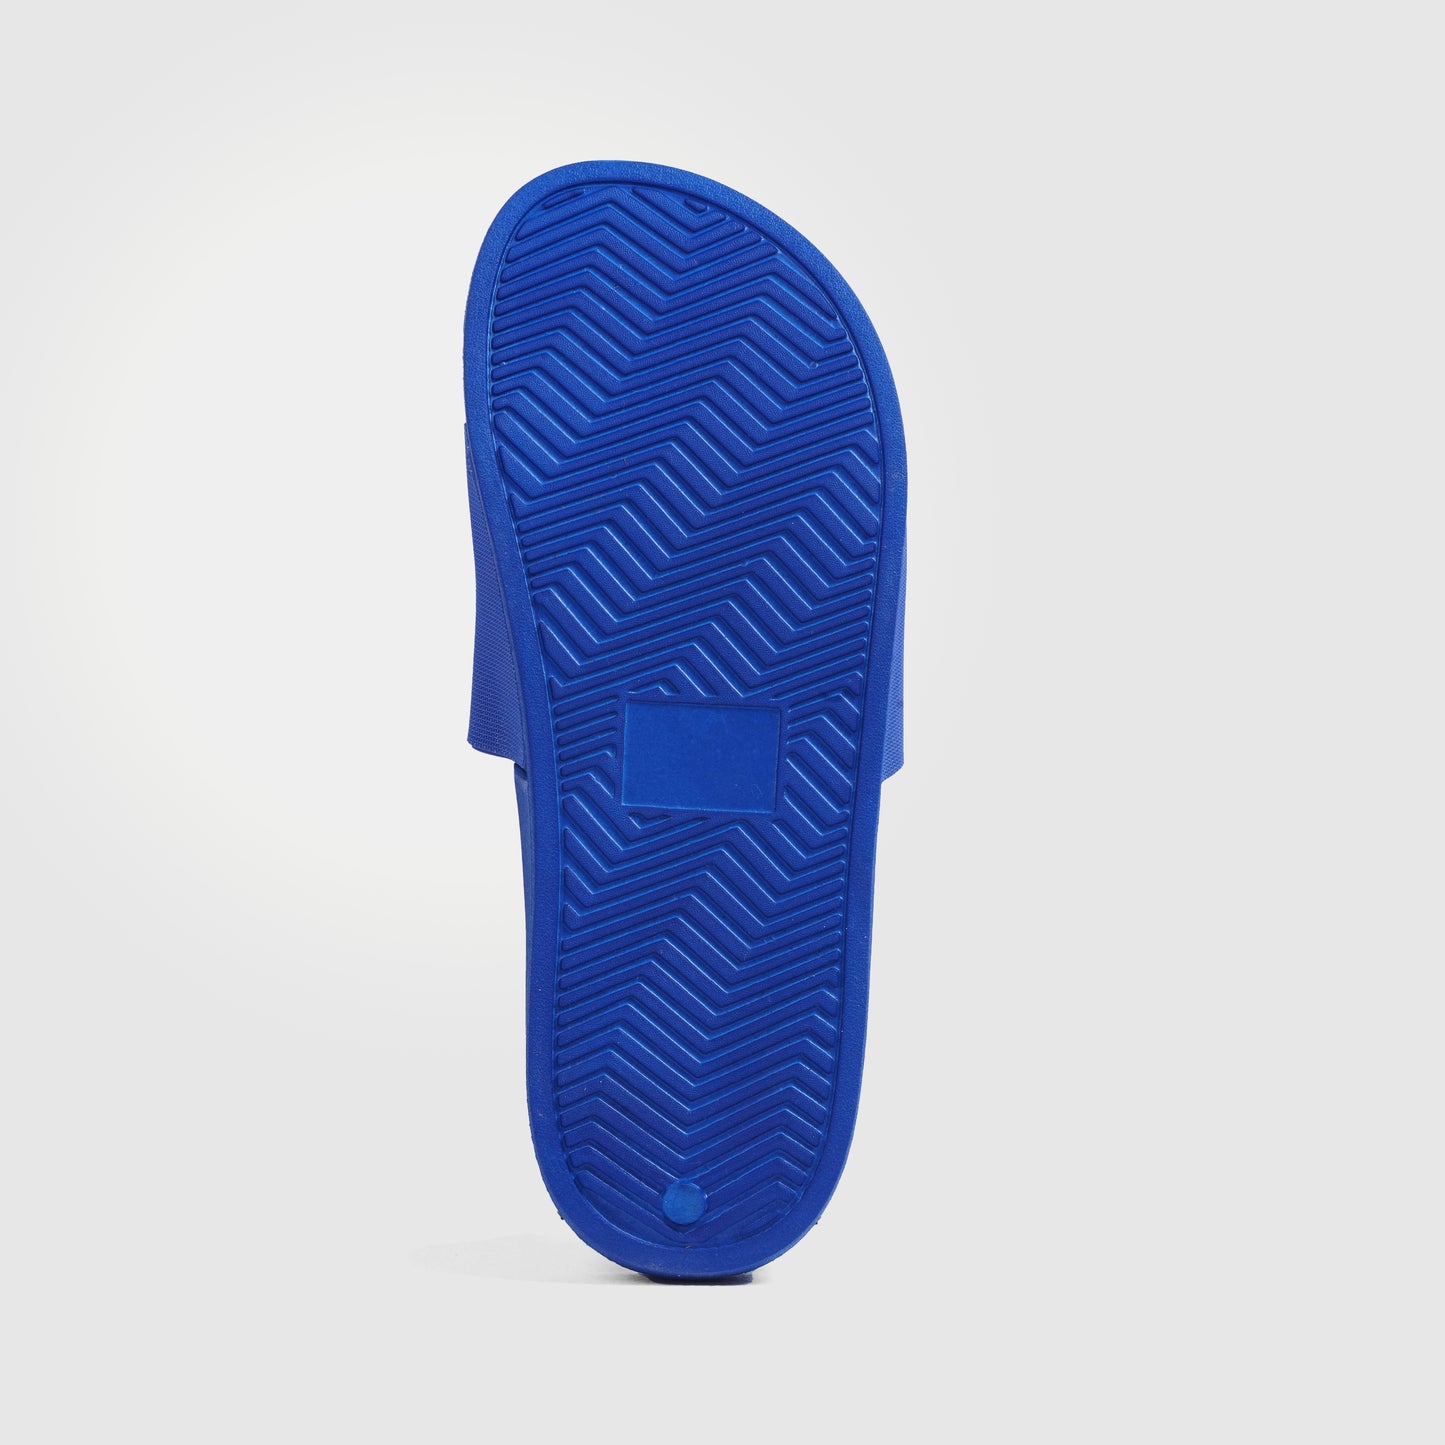 Armour Slide Slippers (Royal Blue)